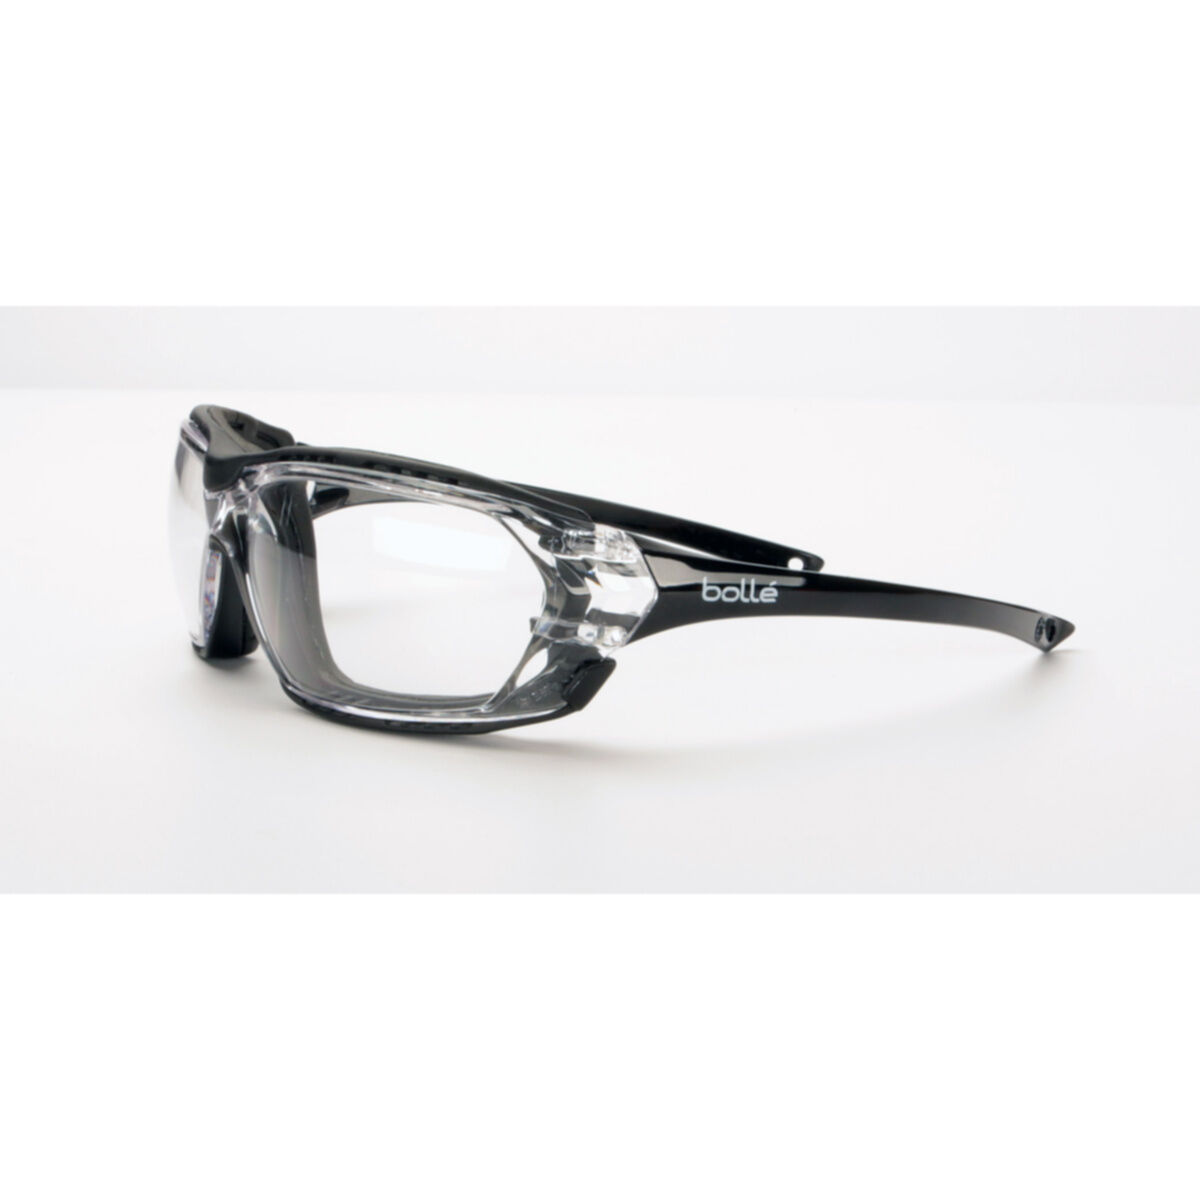 10 x Bolle Prism Safety Glasses Anti Scratch Anti Fog Clear Lens PRIPSI 